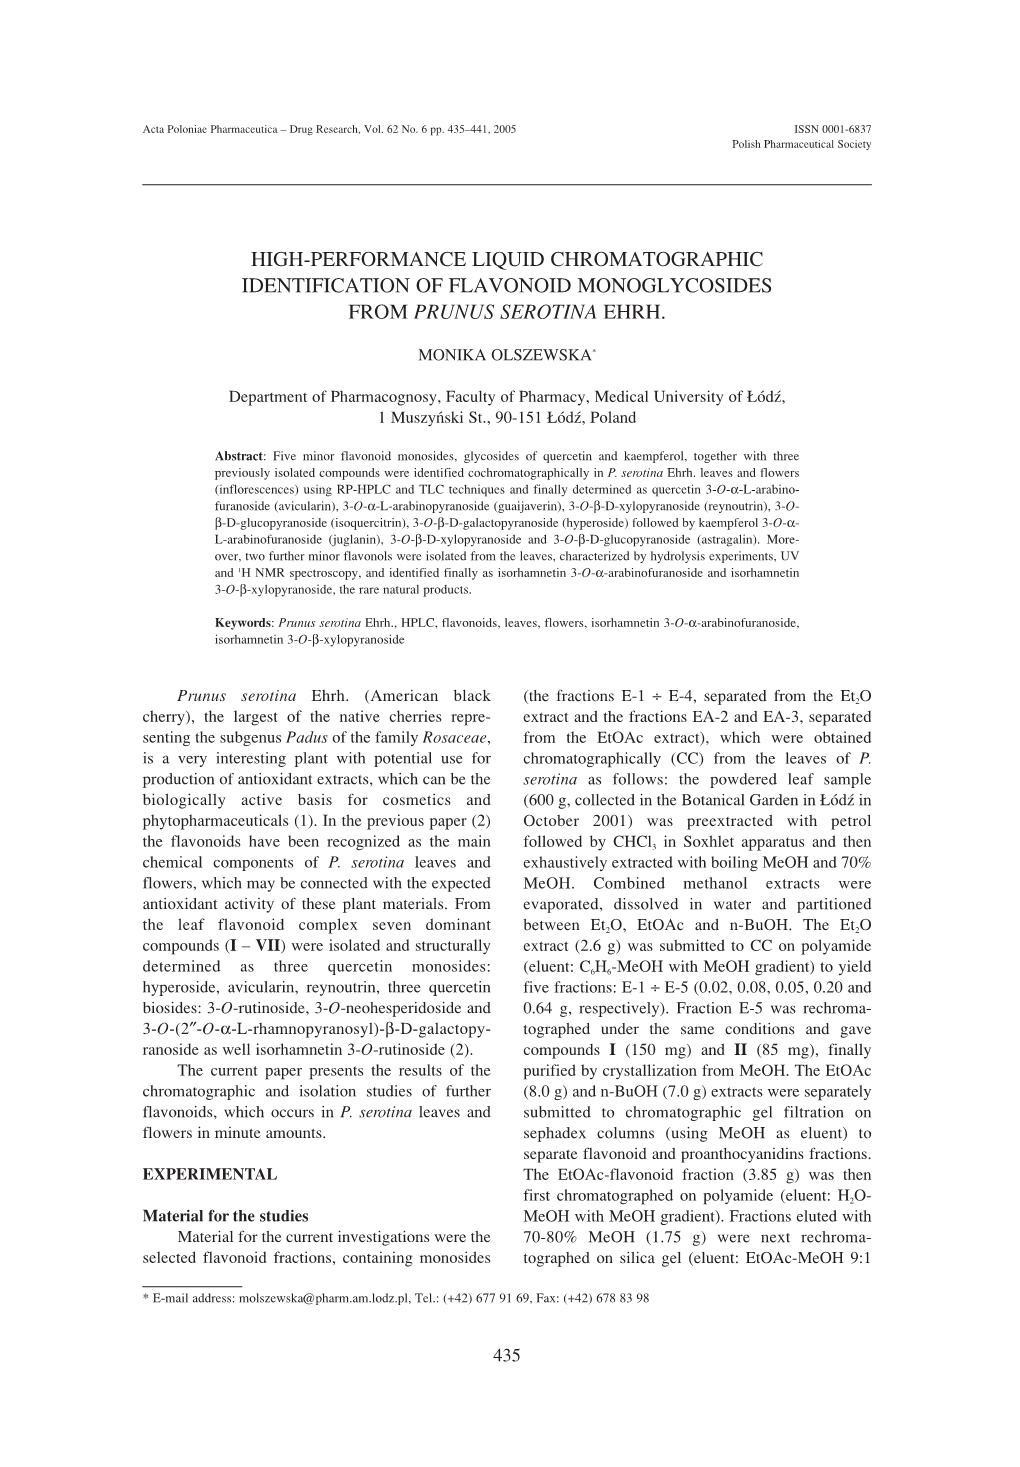 High-Performance Liquid Chromatographic Identification of Flavonoid Monoglycosides from Prunus Serotina Ehrh